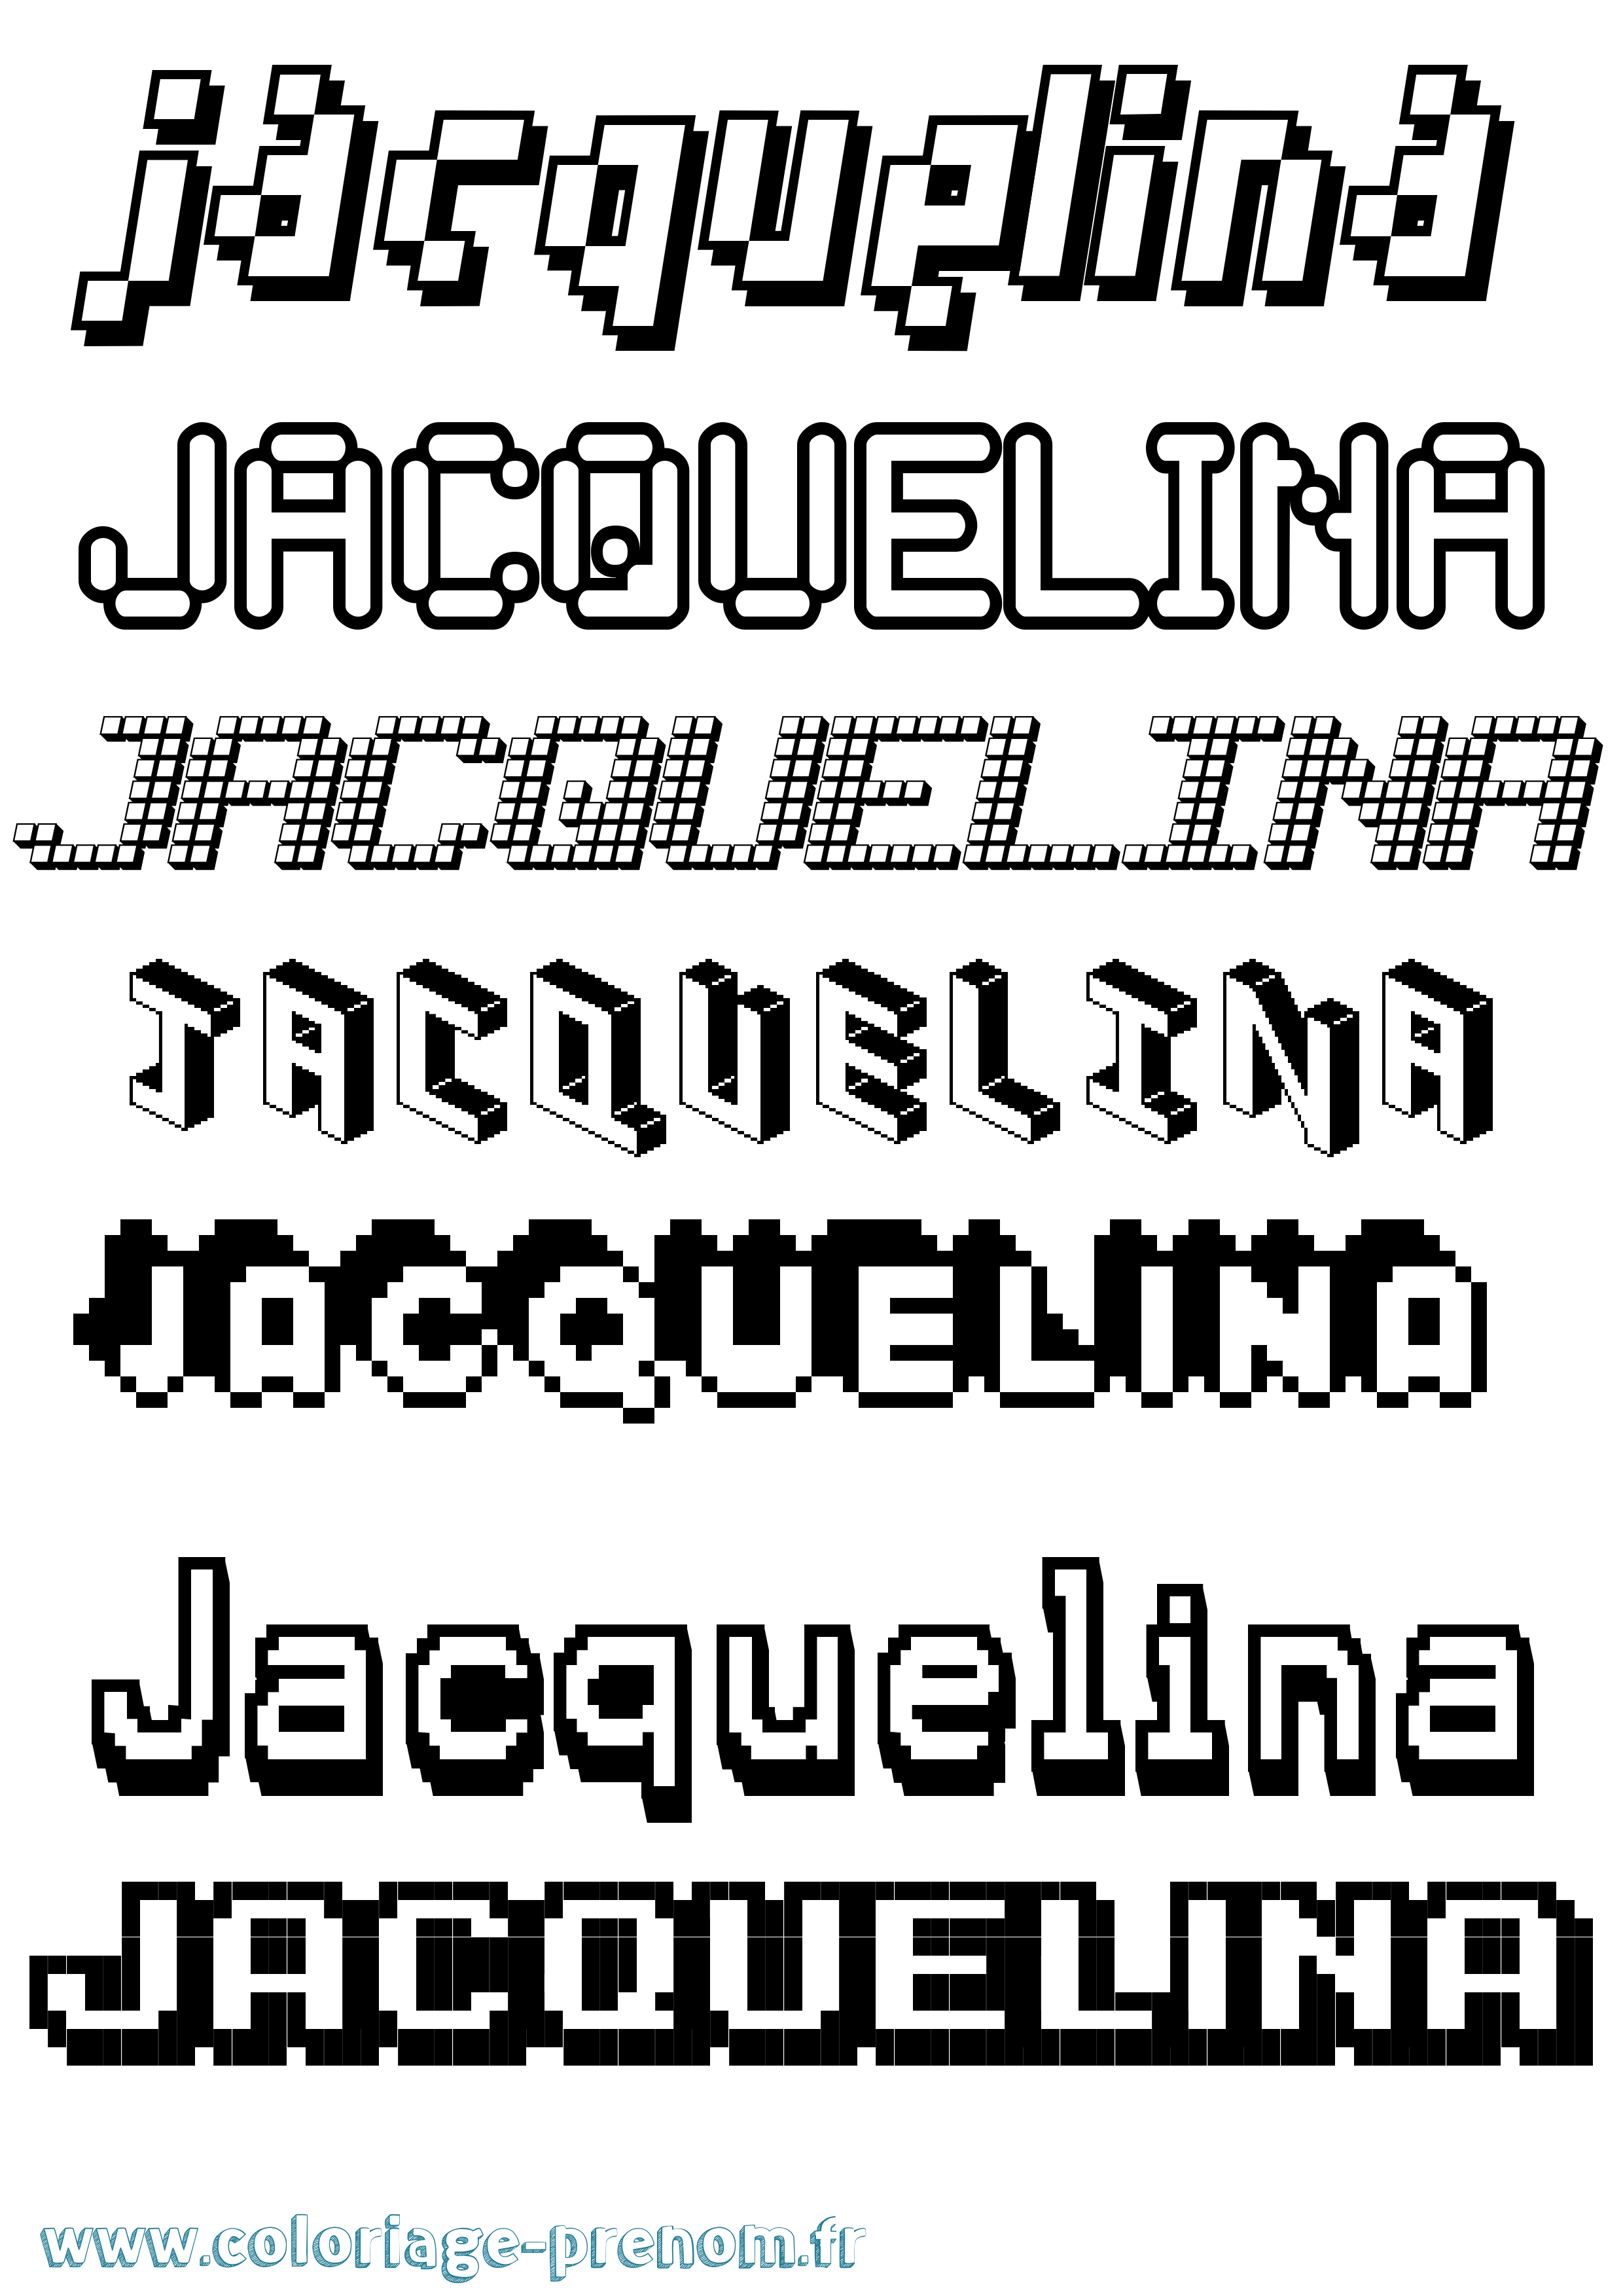 Coloriage prénom Jacquelina Pixel